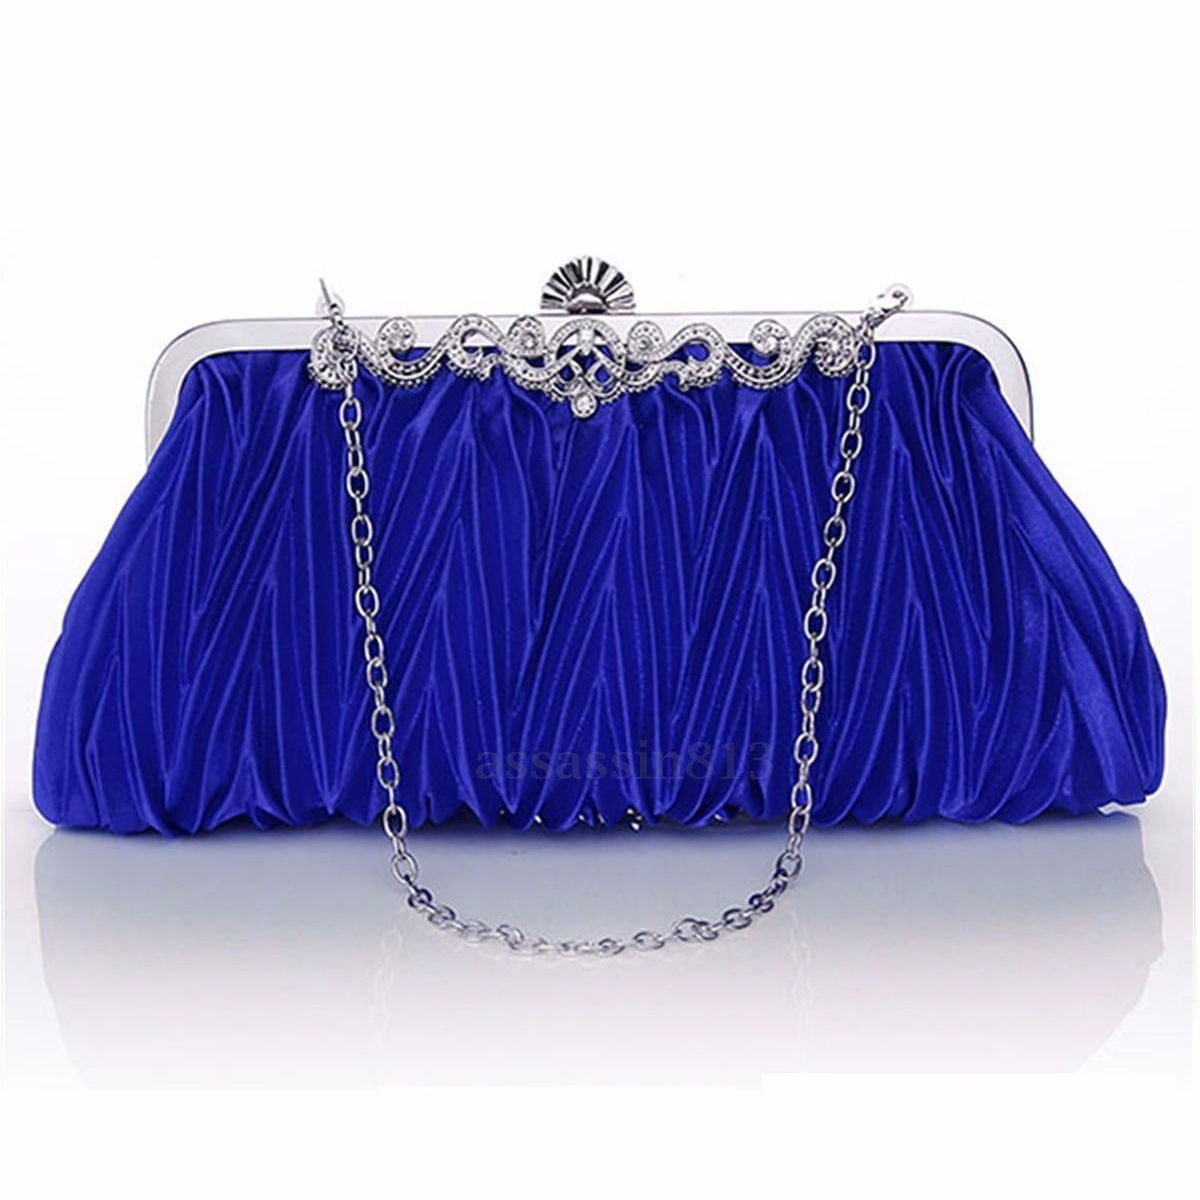 New Women's Satin Crystal Diamante Clutch Bag Evening Party Handbag Bridal Purse 